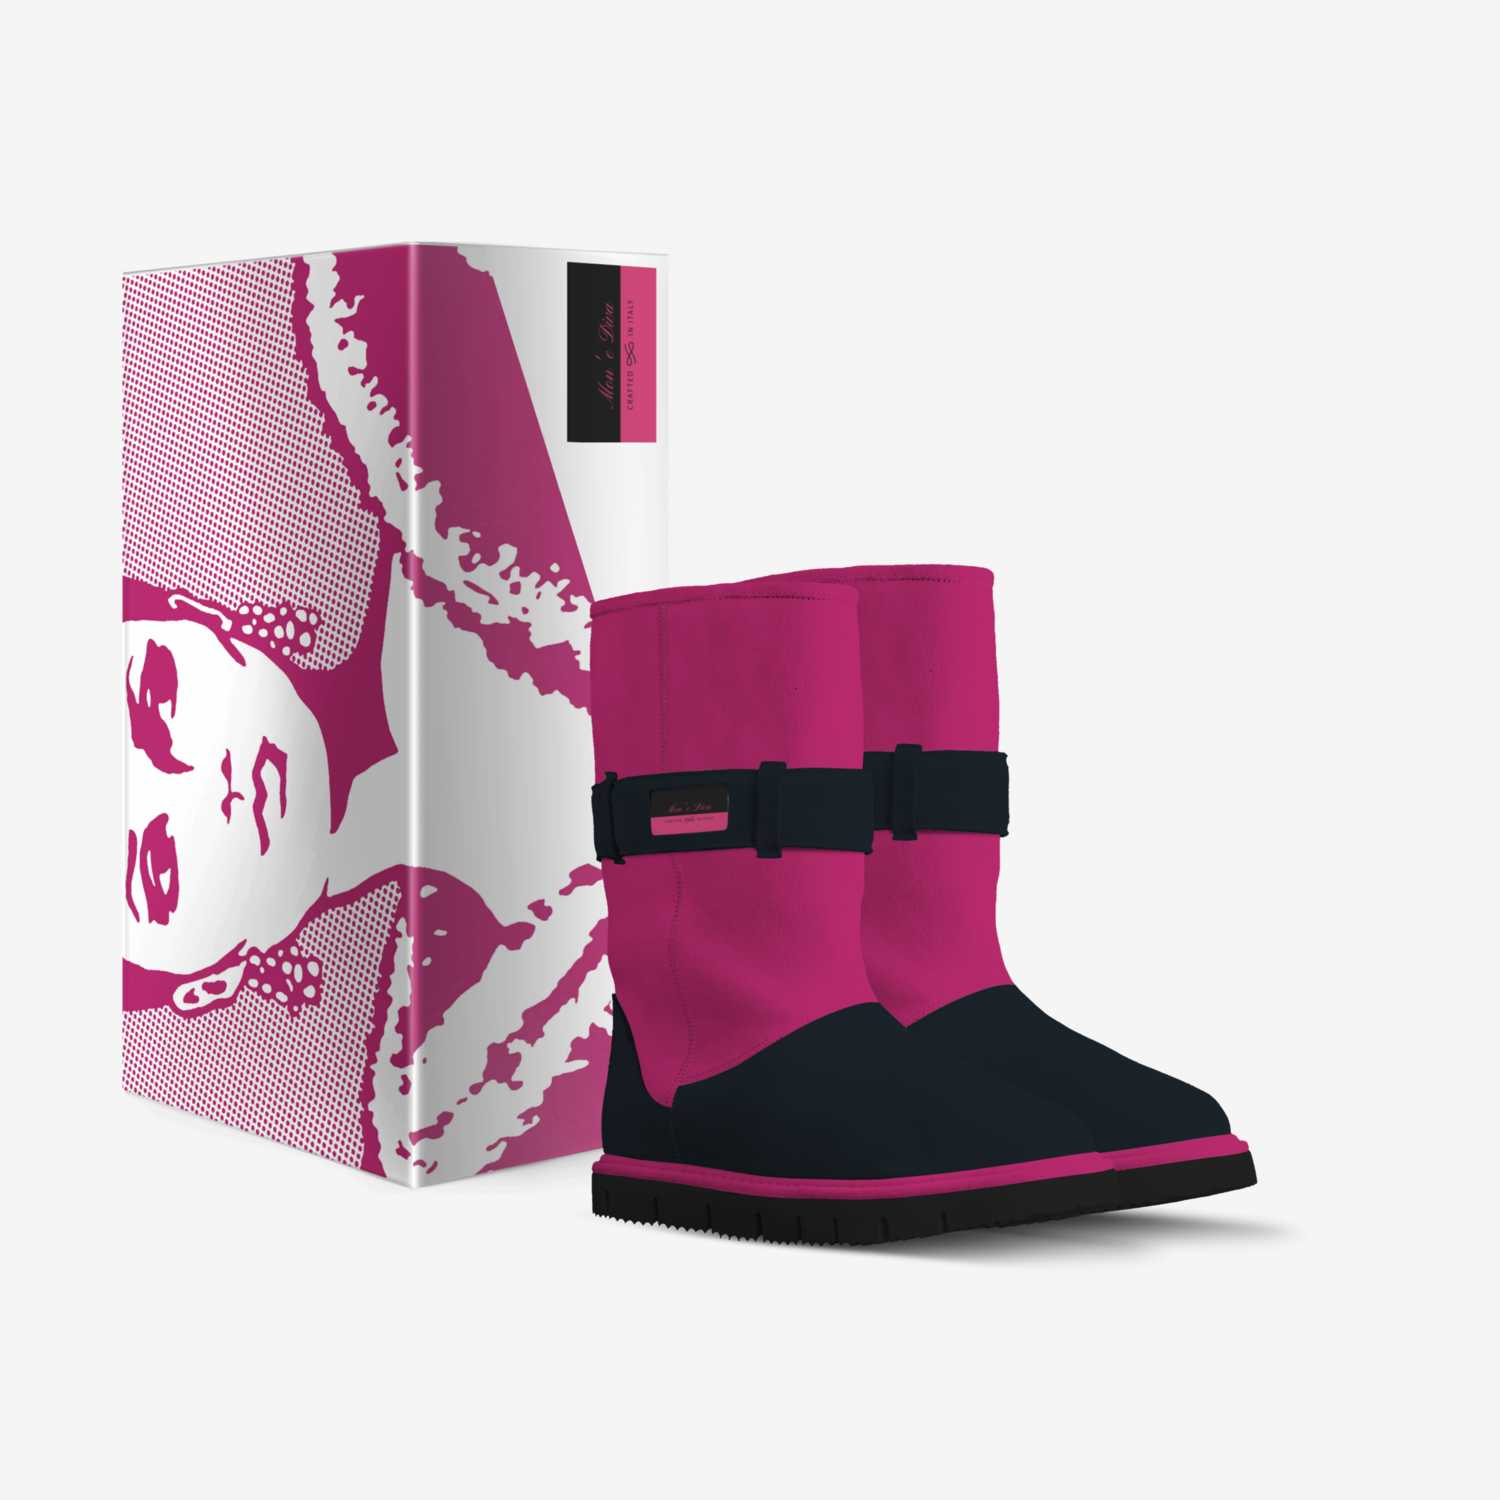 Mon'e Diva custom made in Italy shoes by John Dough | Box view